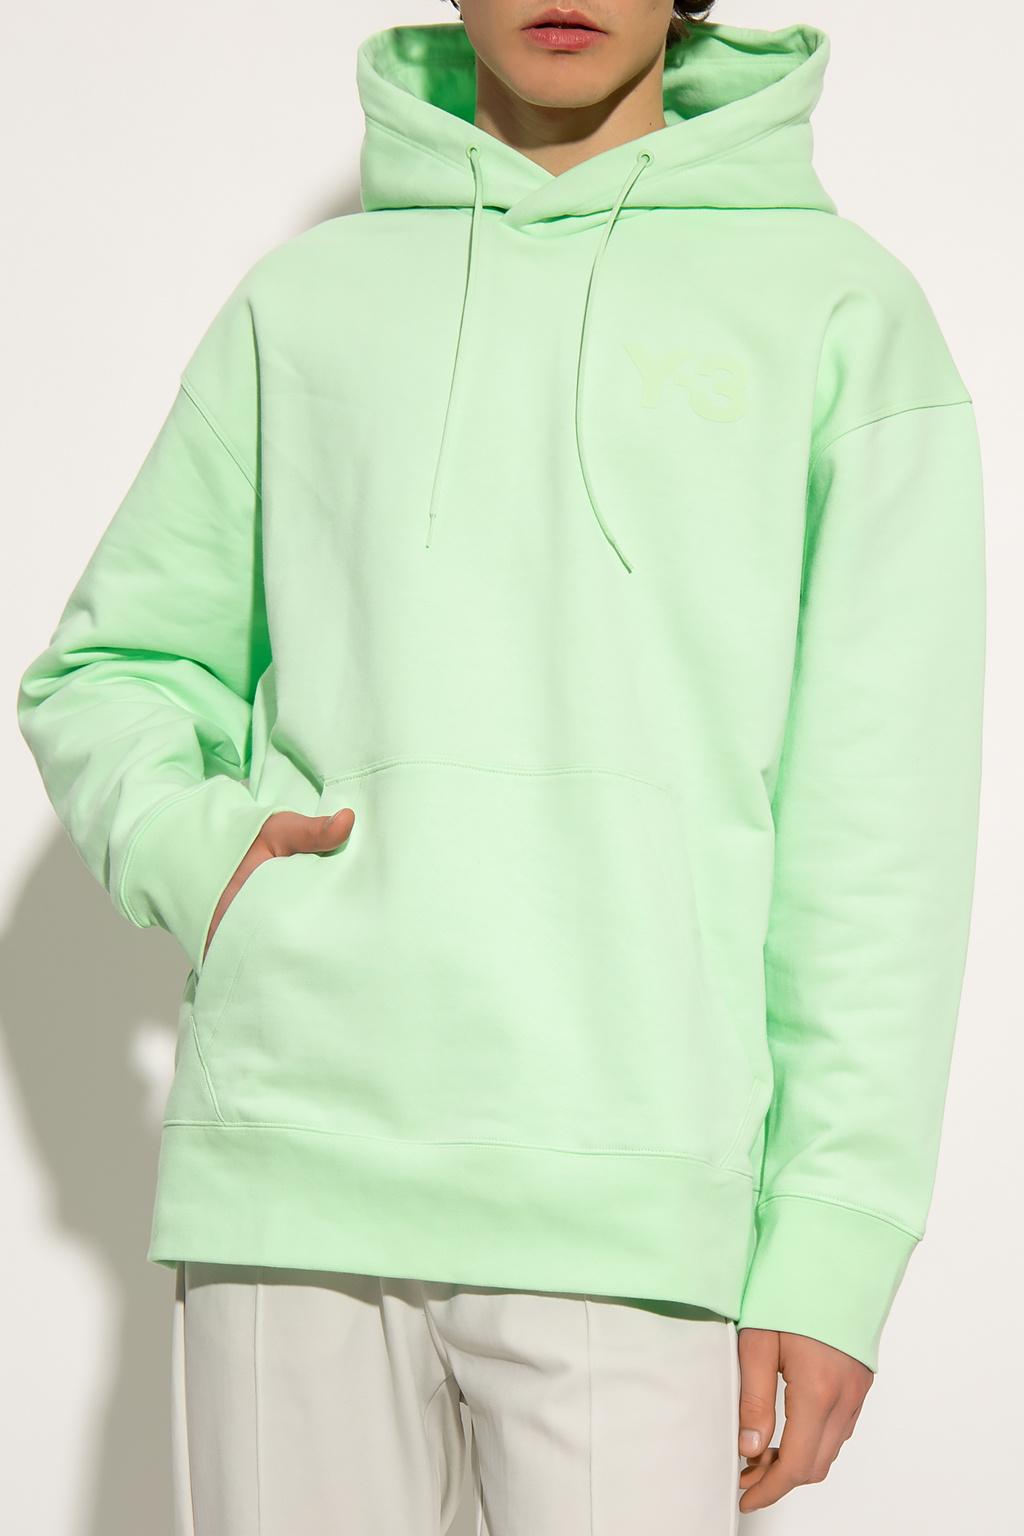 Y-3 Cotton Logo Hoodie in Green for Men | Lyst